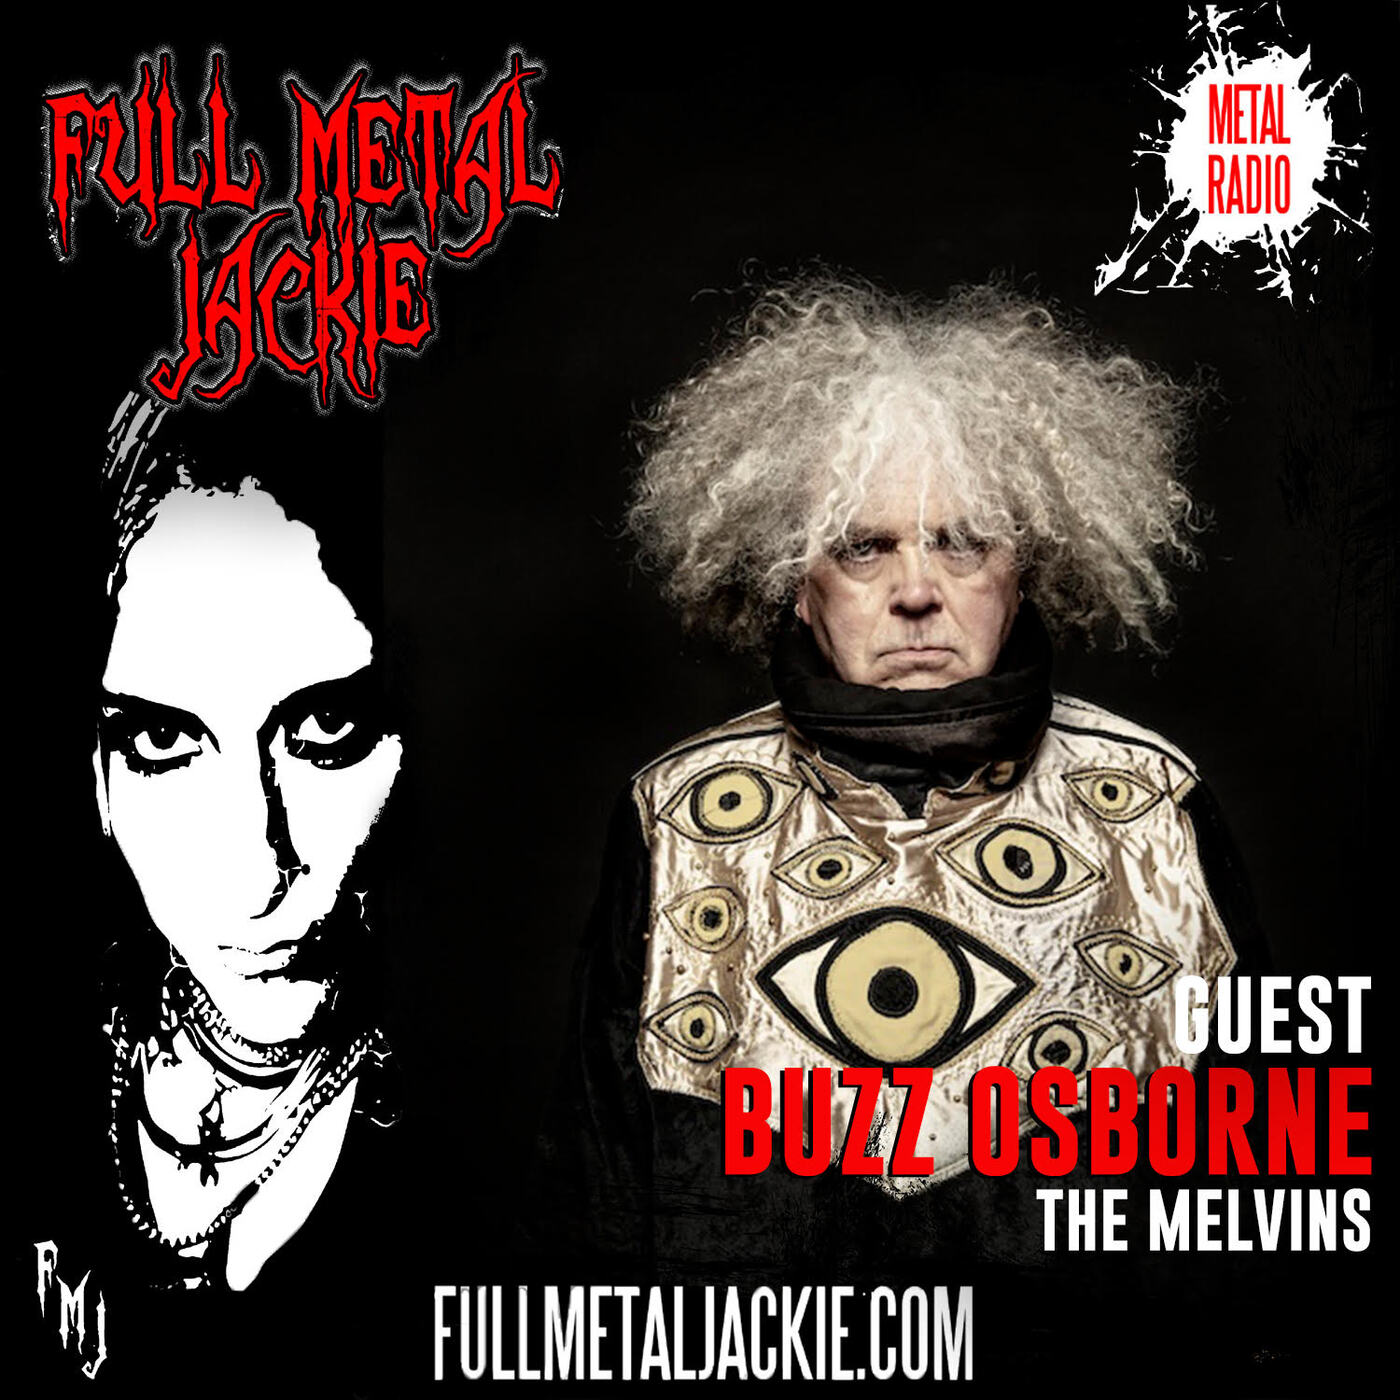 Buzz Osborne of The Melvins on the Full Metal Jackie Radio